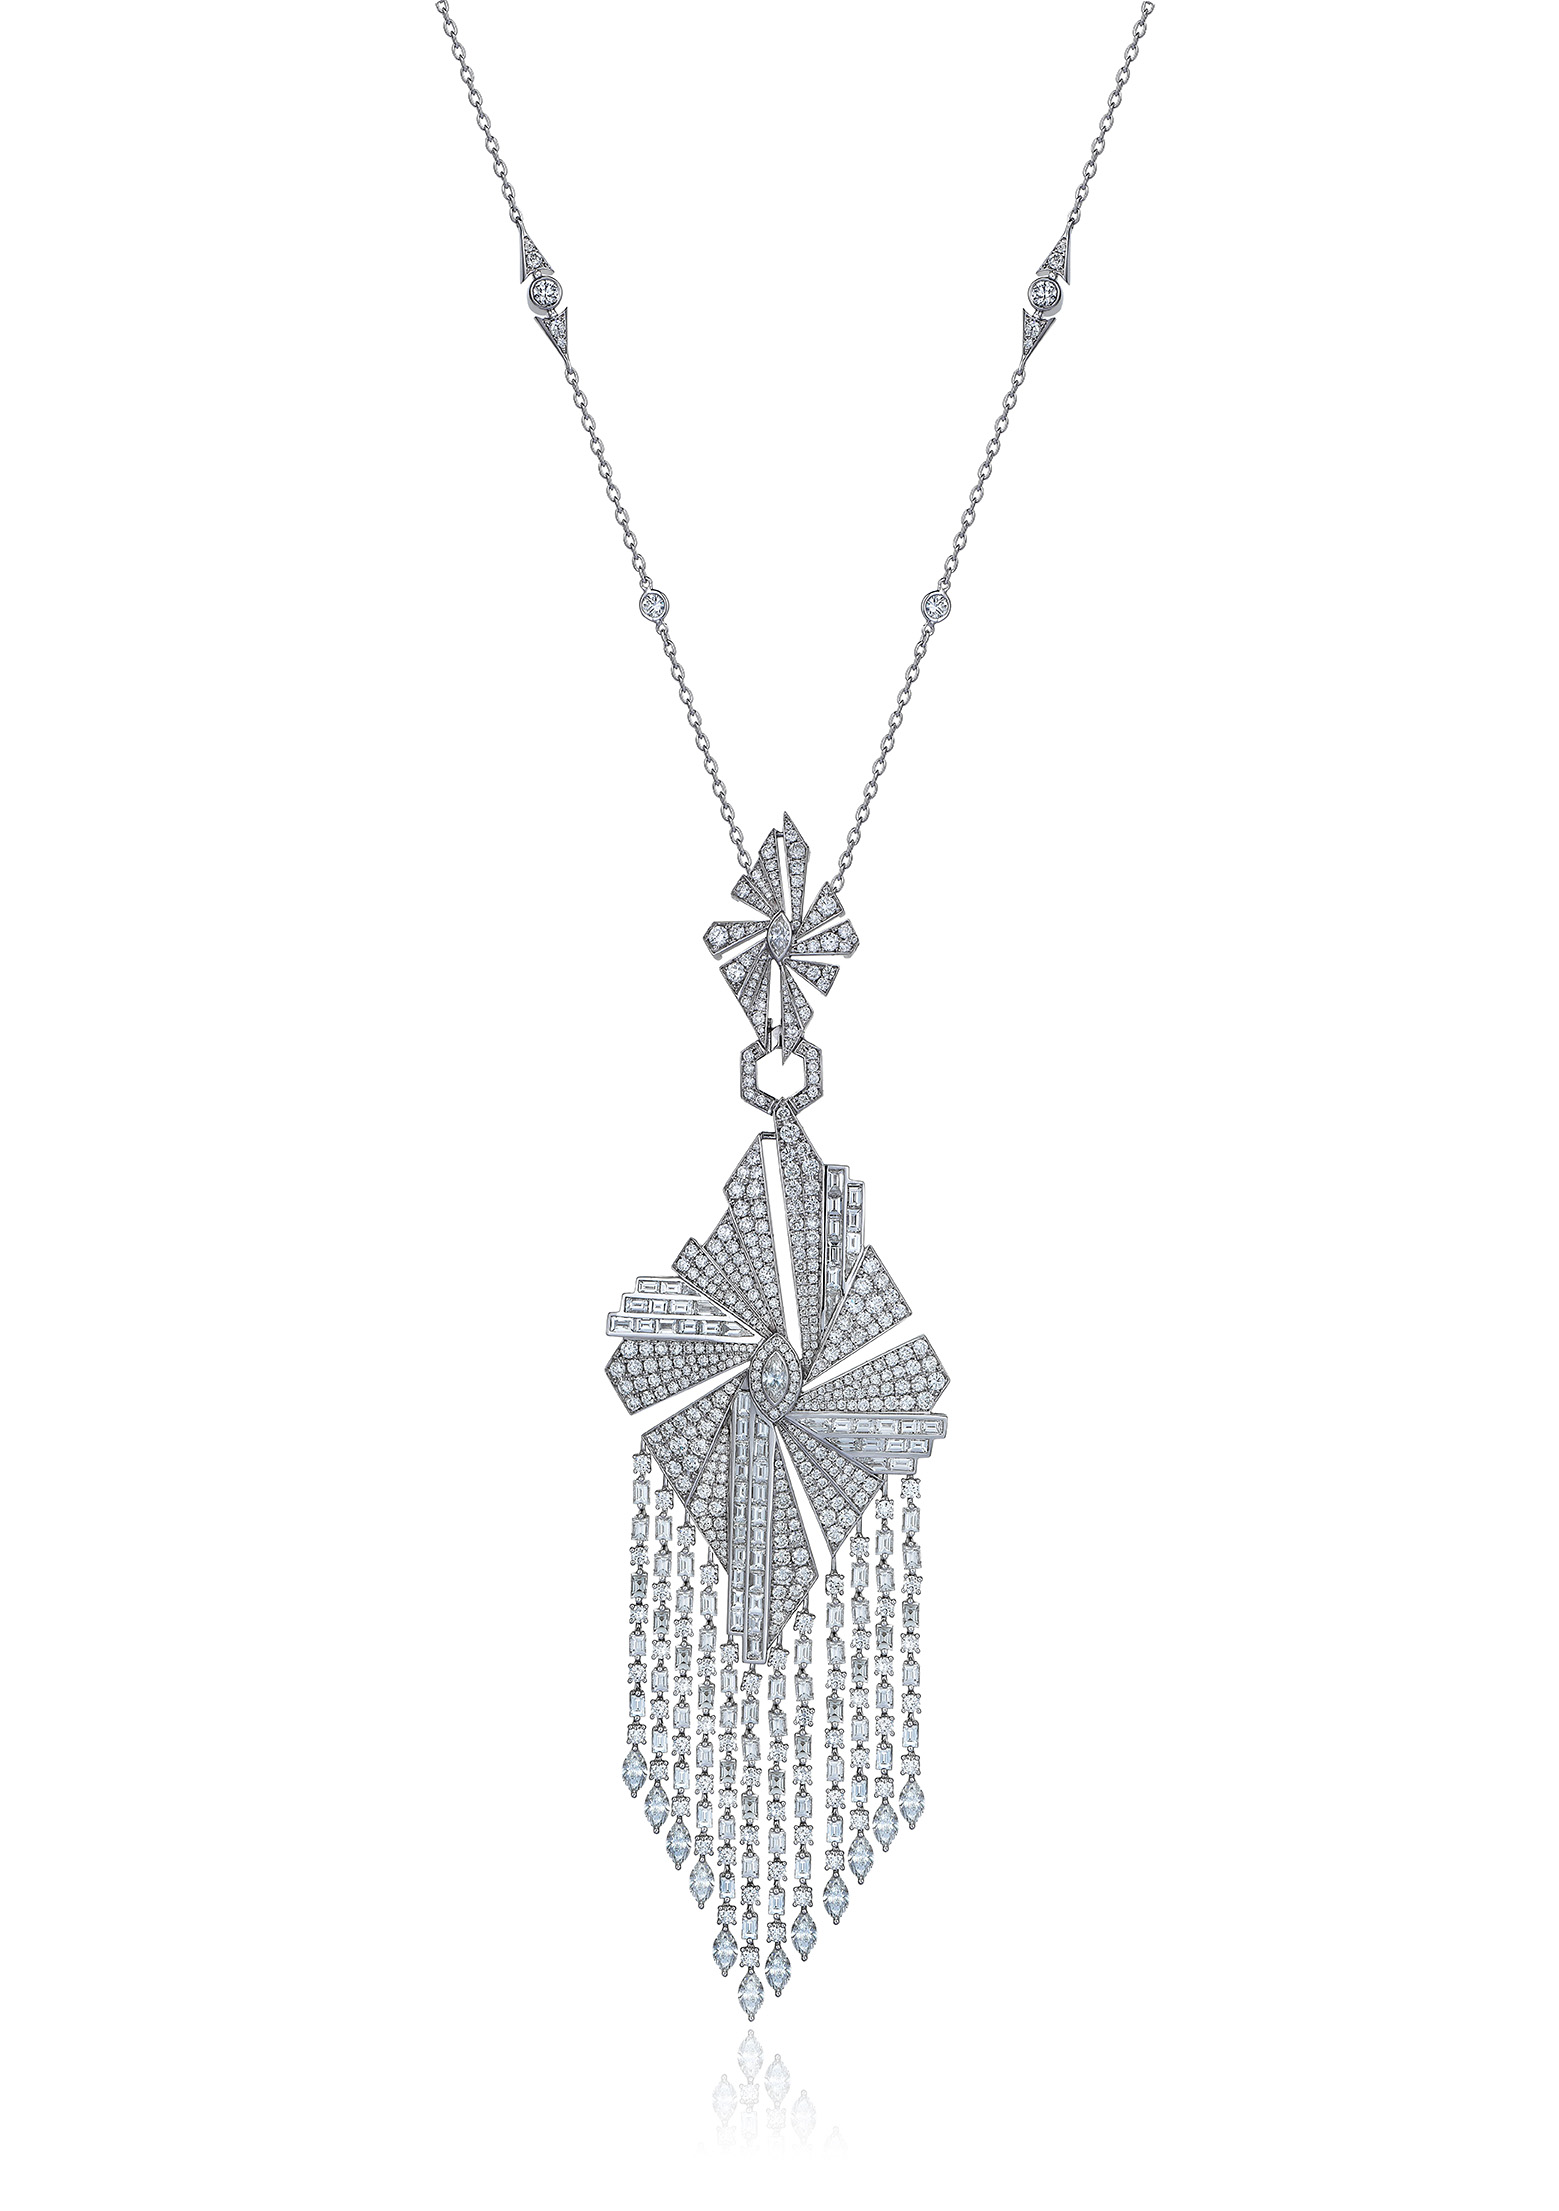 15.94 ct Diamond Necklace